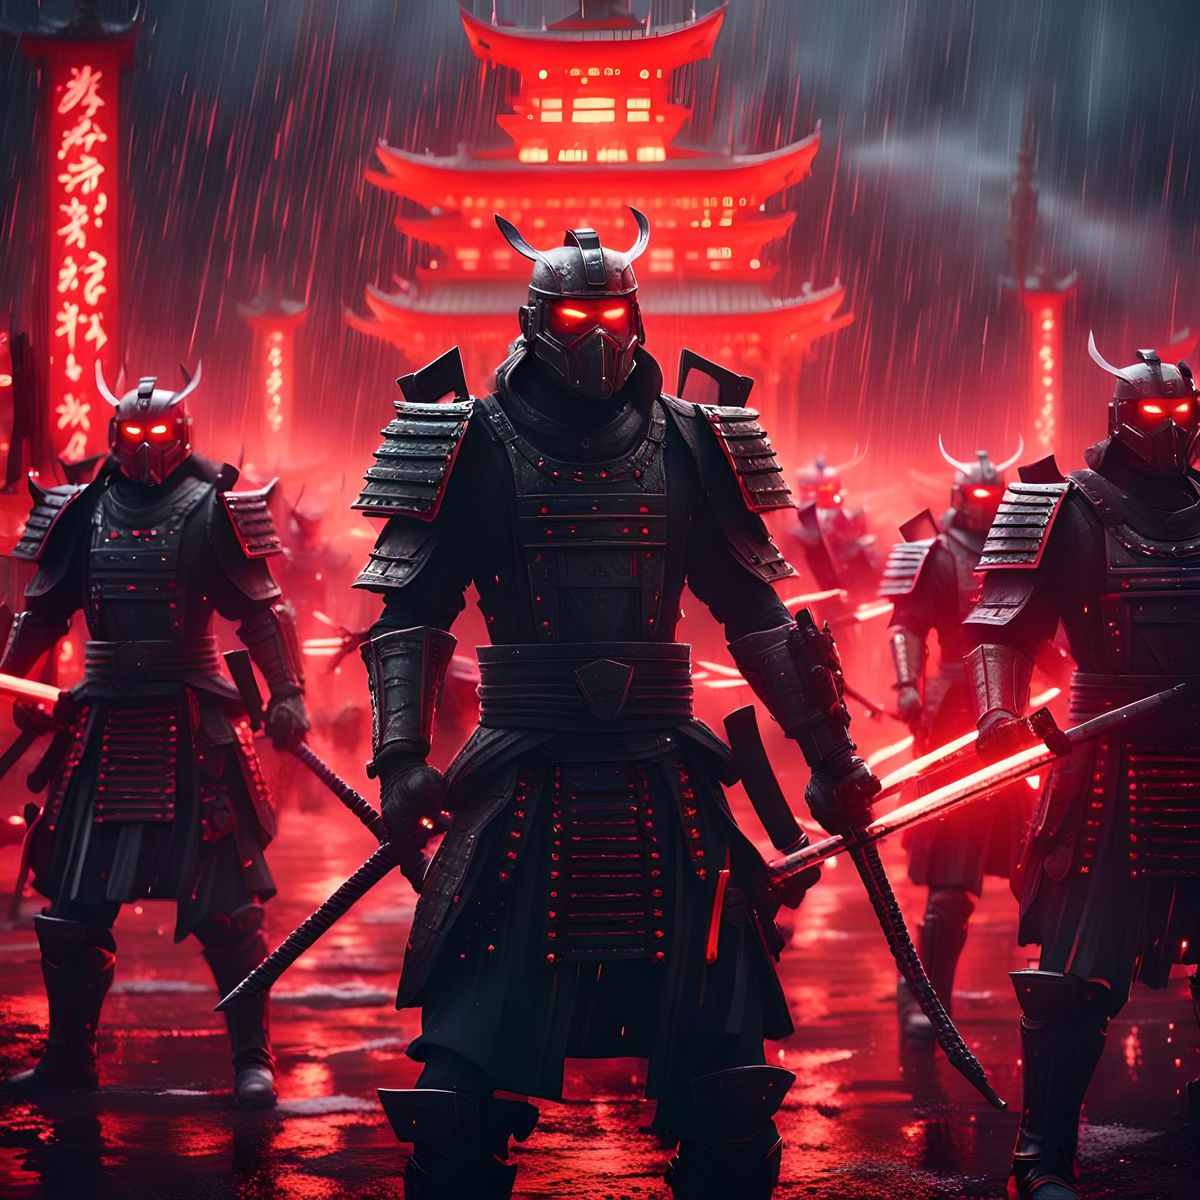 Cyber style samurai warriors ready for battle in the rain